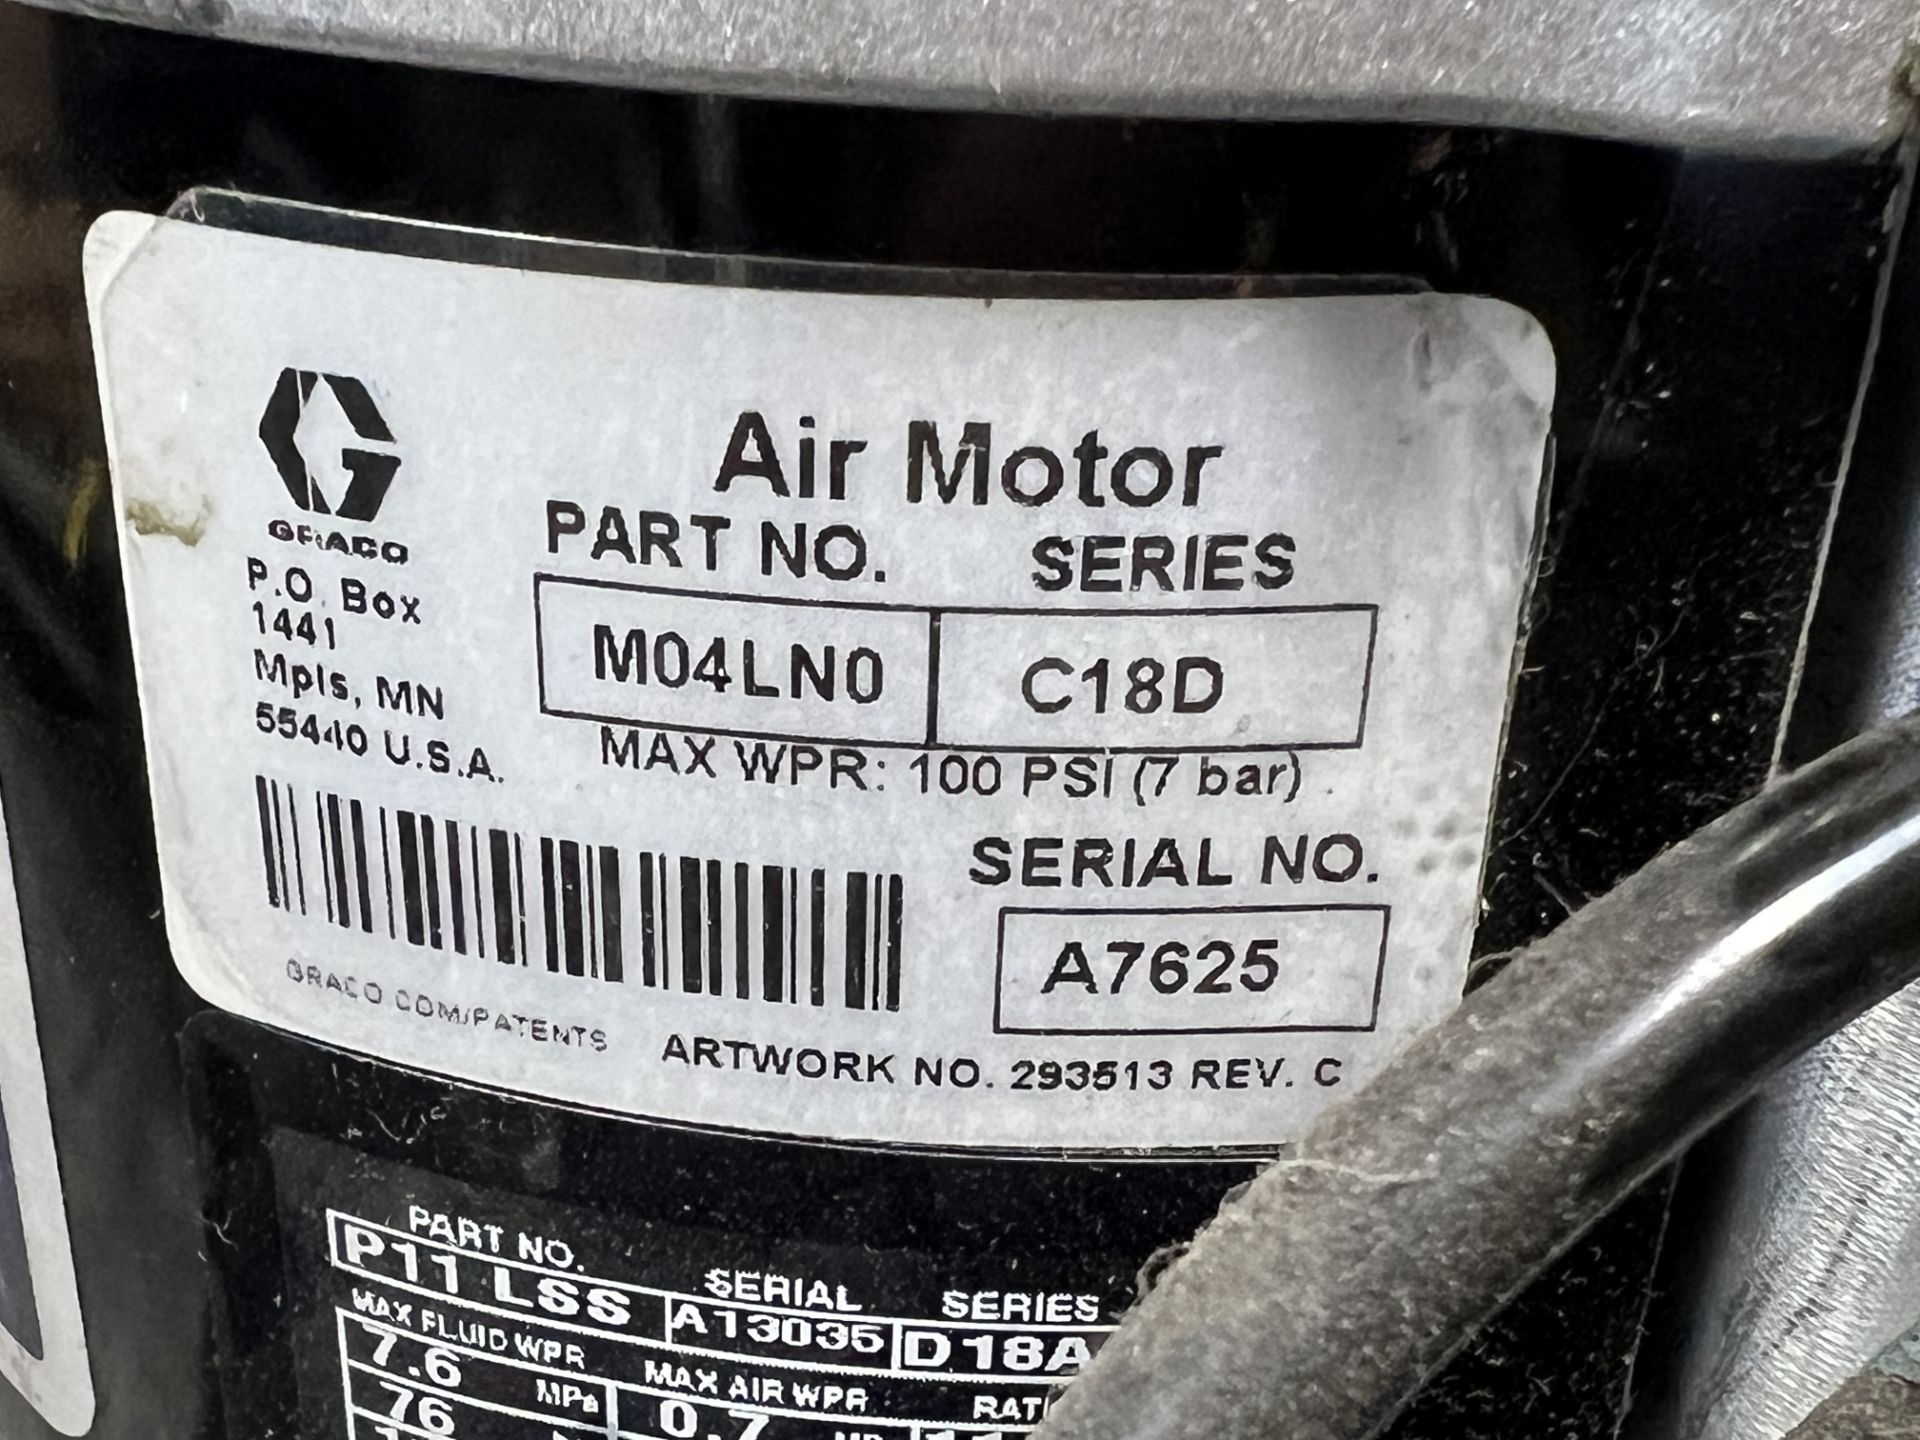 GRACO PIILSS CHECK-MATE CII AIR POWERED GREASE PUMP SERIAL # A12969 - Image 2 of 4